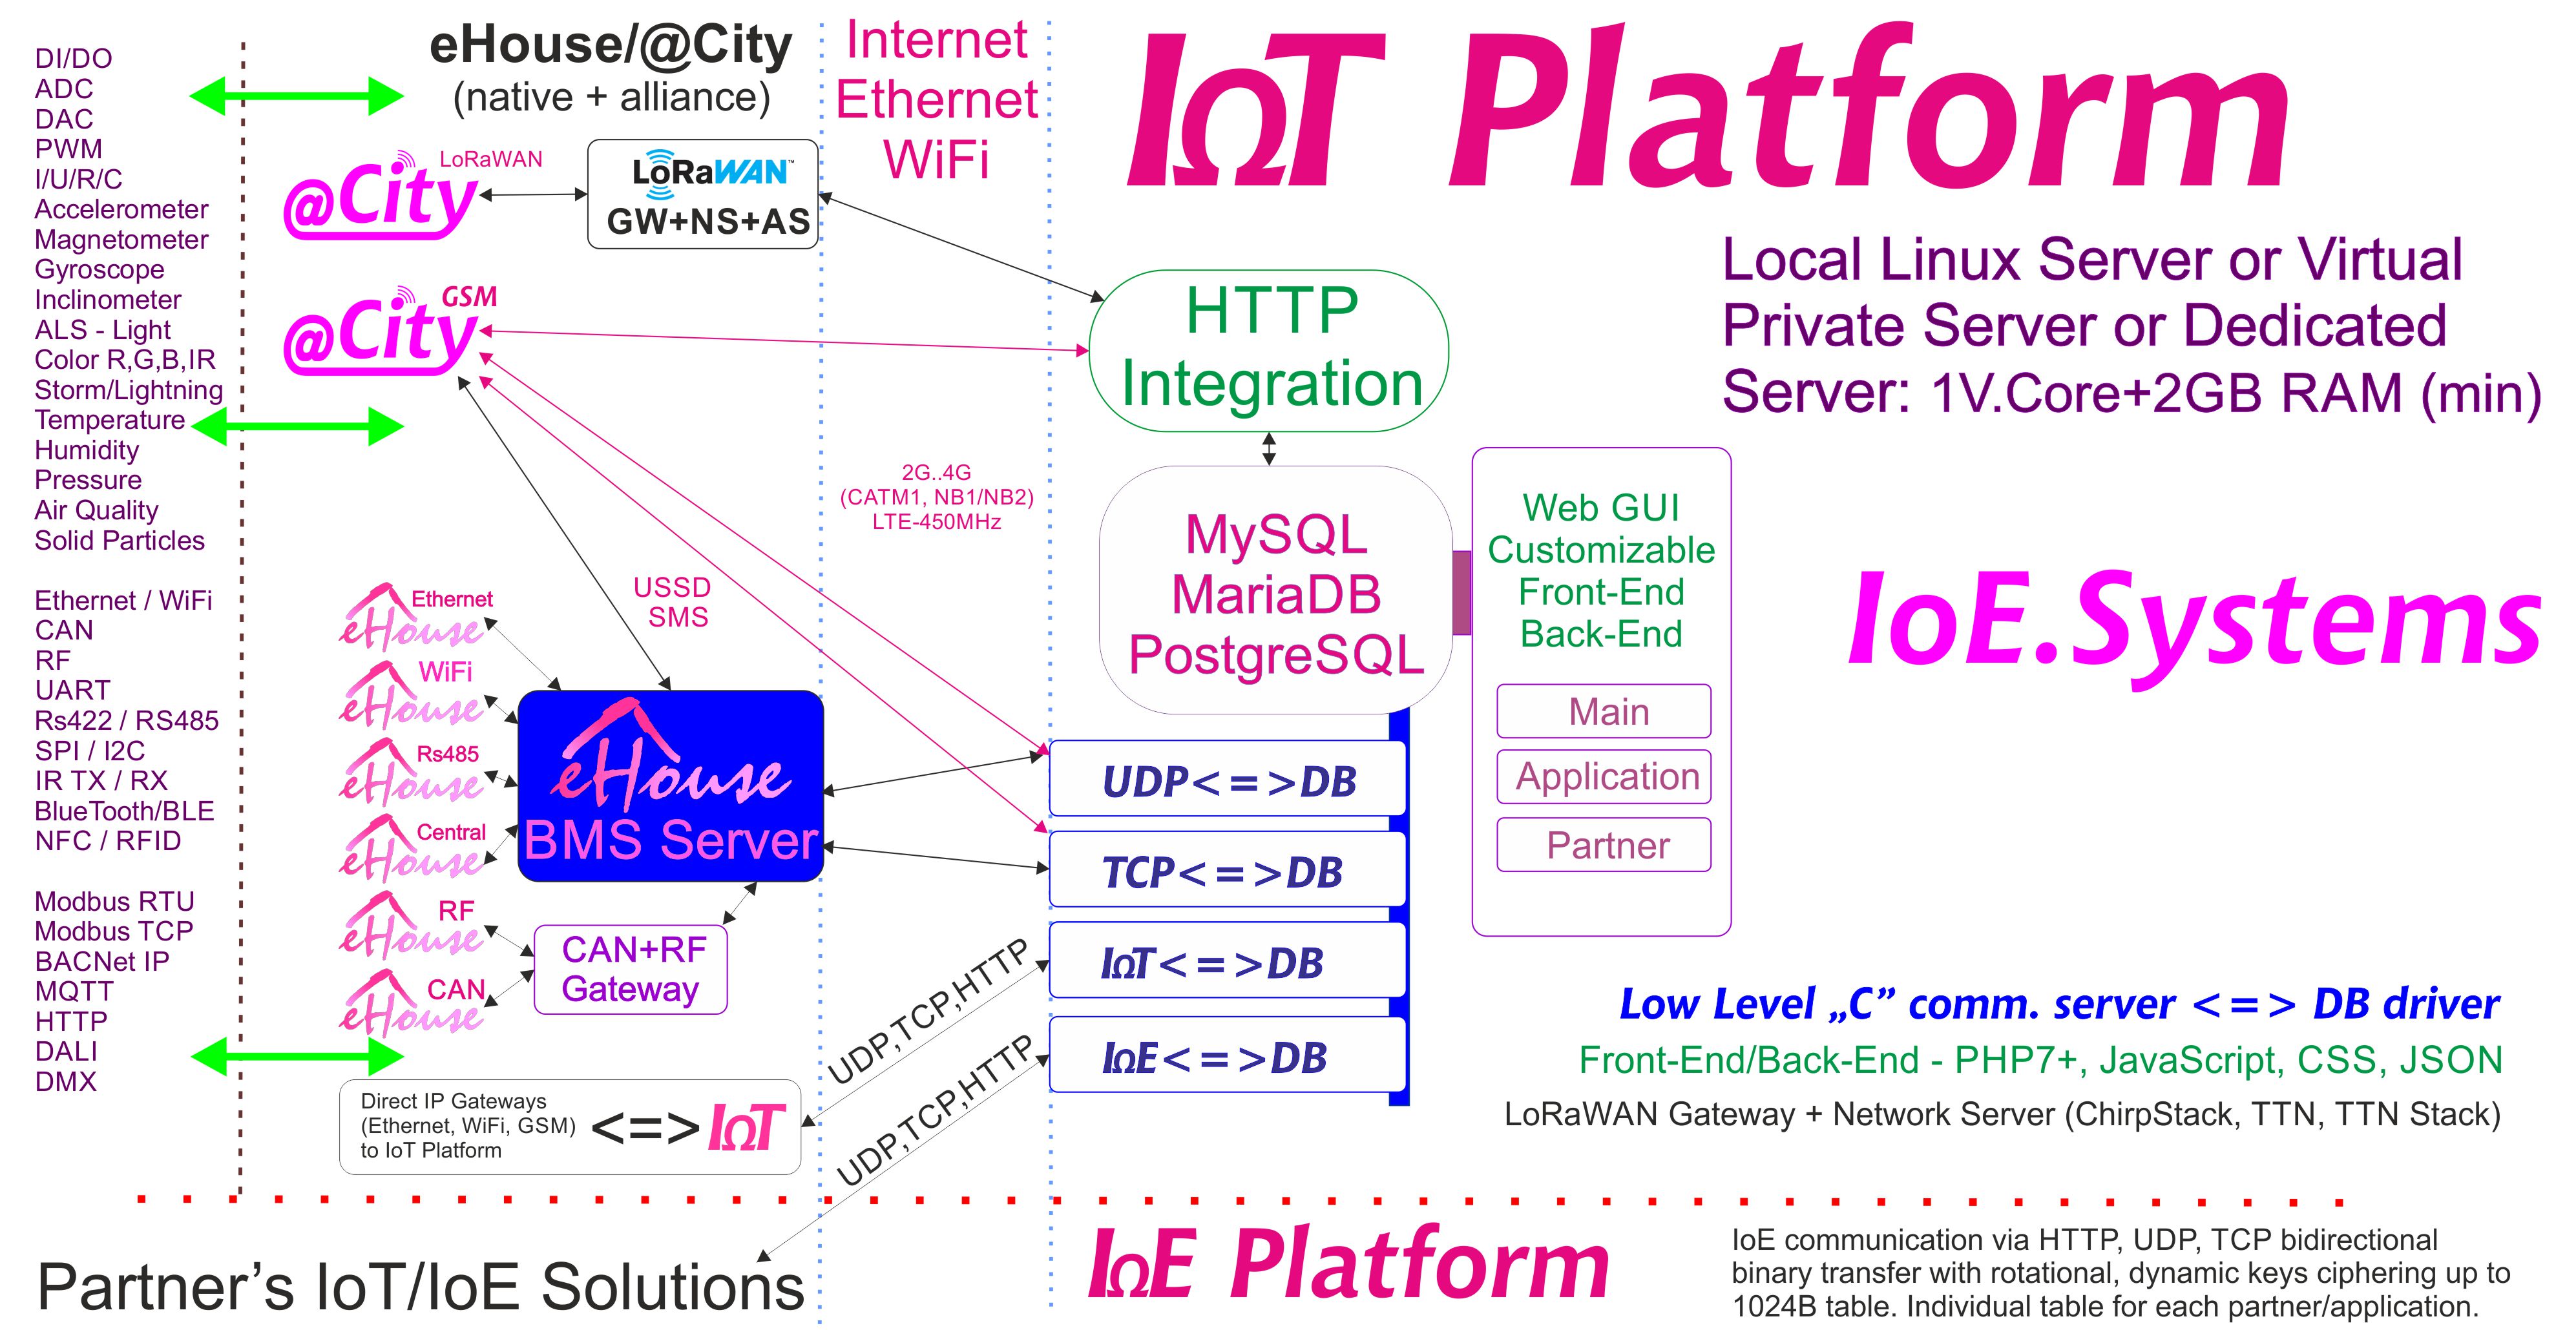 eHouse, Perangkat Lunak Server eCity BAS, BMS, IOE, Sistem dan Platform IoT